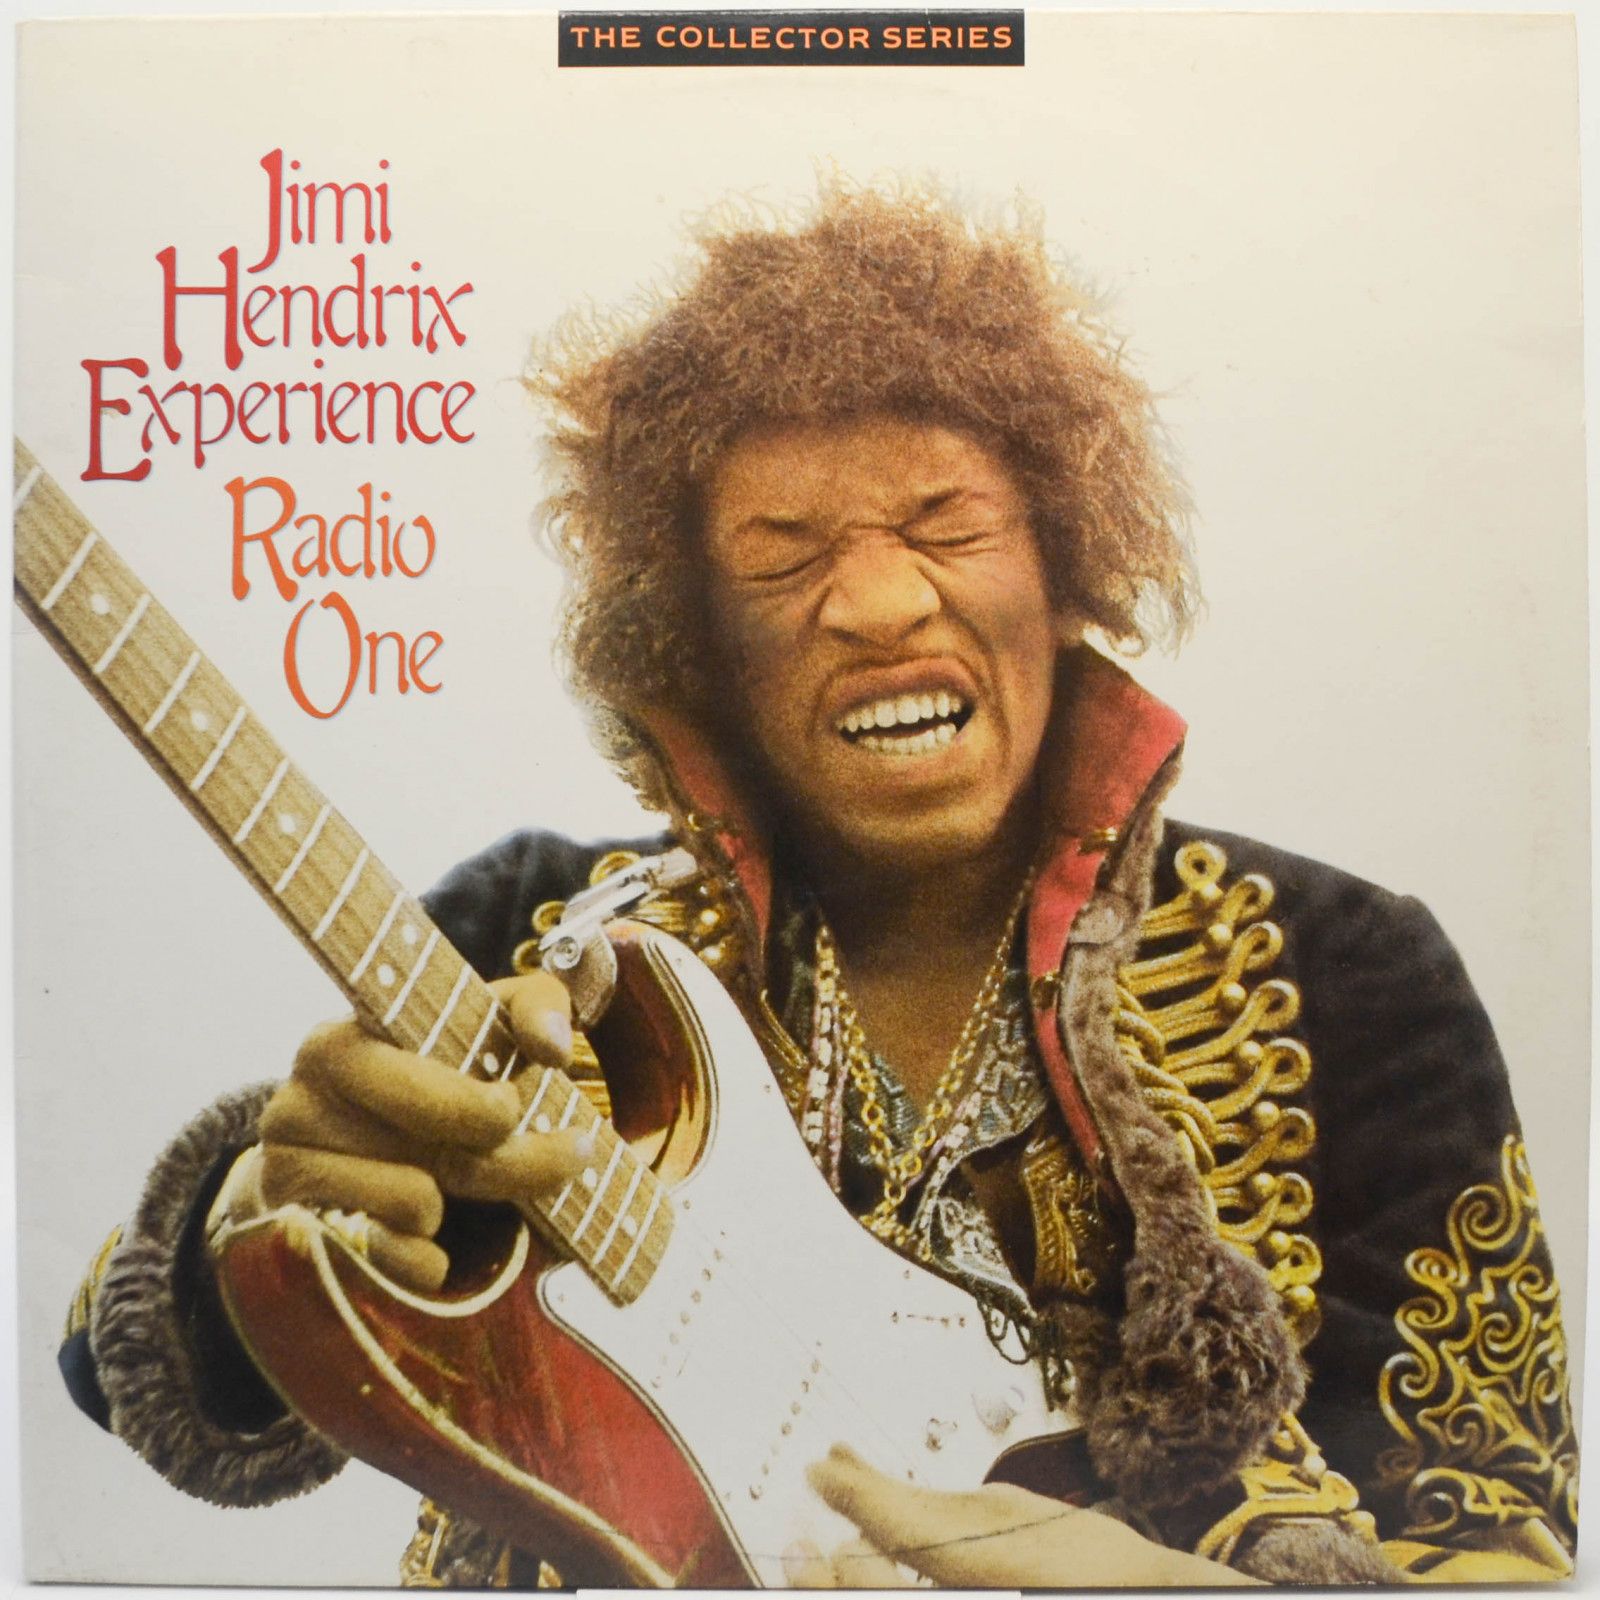 Jimi Hendrix Experience — Radio One (2LP, UK), 1989